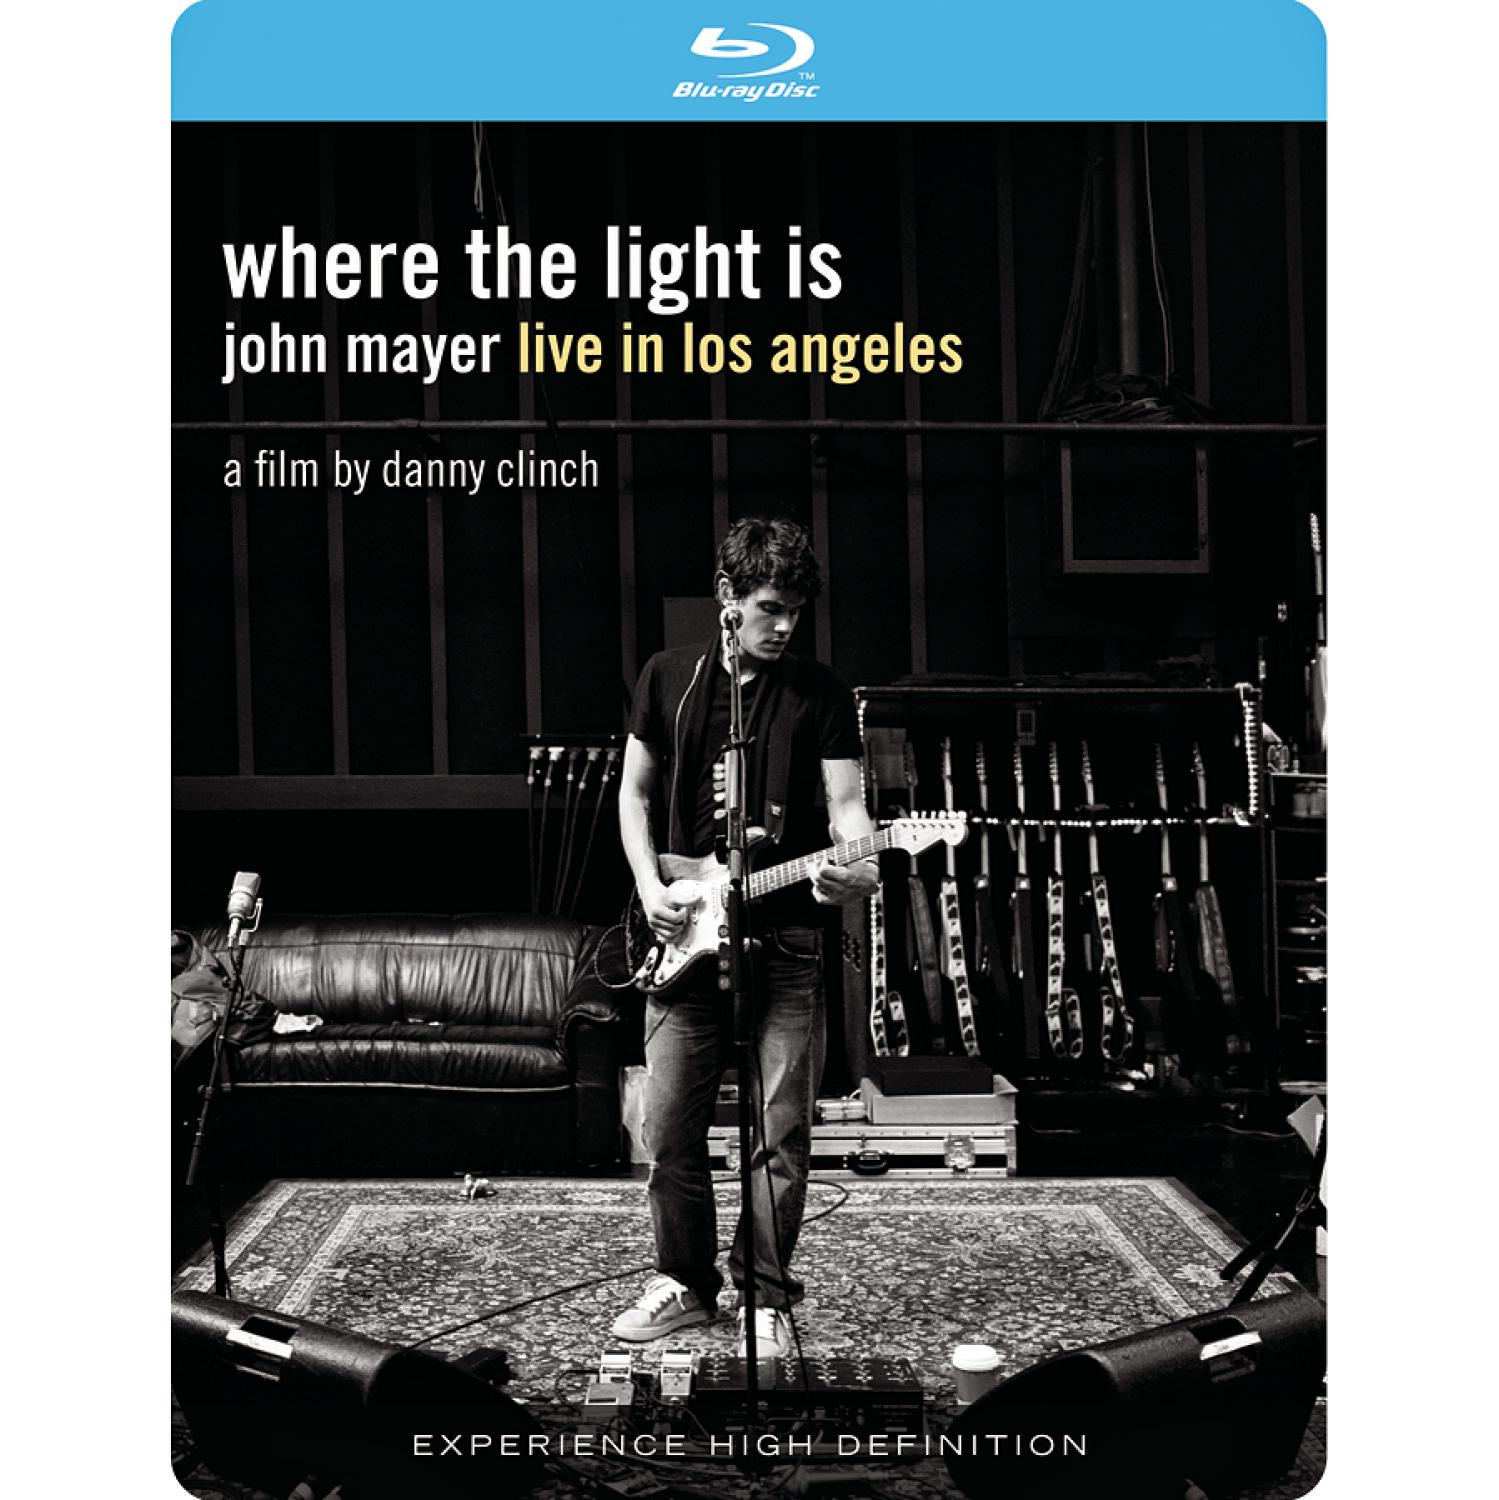 John Mayer - THE JOHN IN - MAYER - IS ANGELE (Blu-ray) LIVE WHERE LOS LIGHT